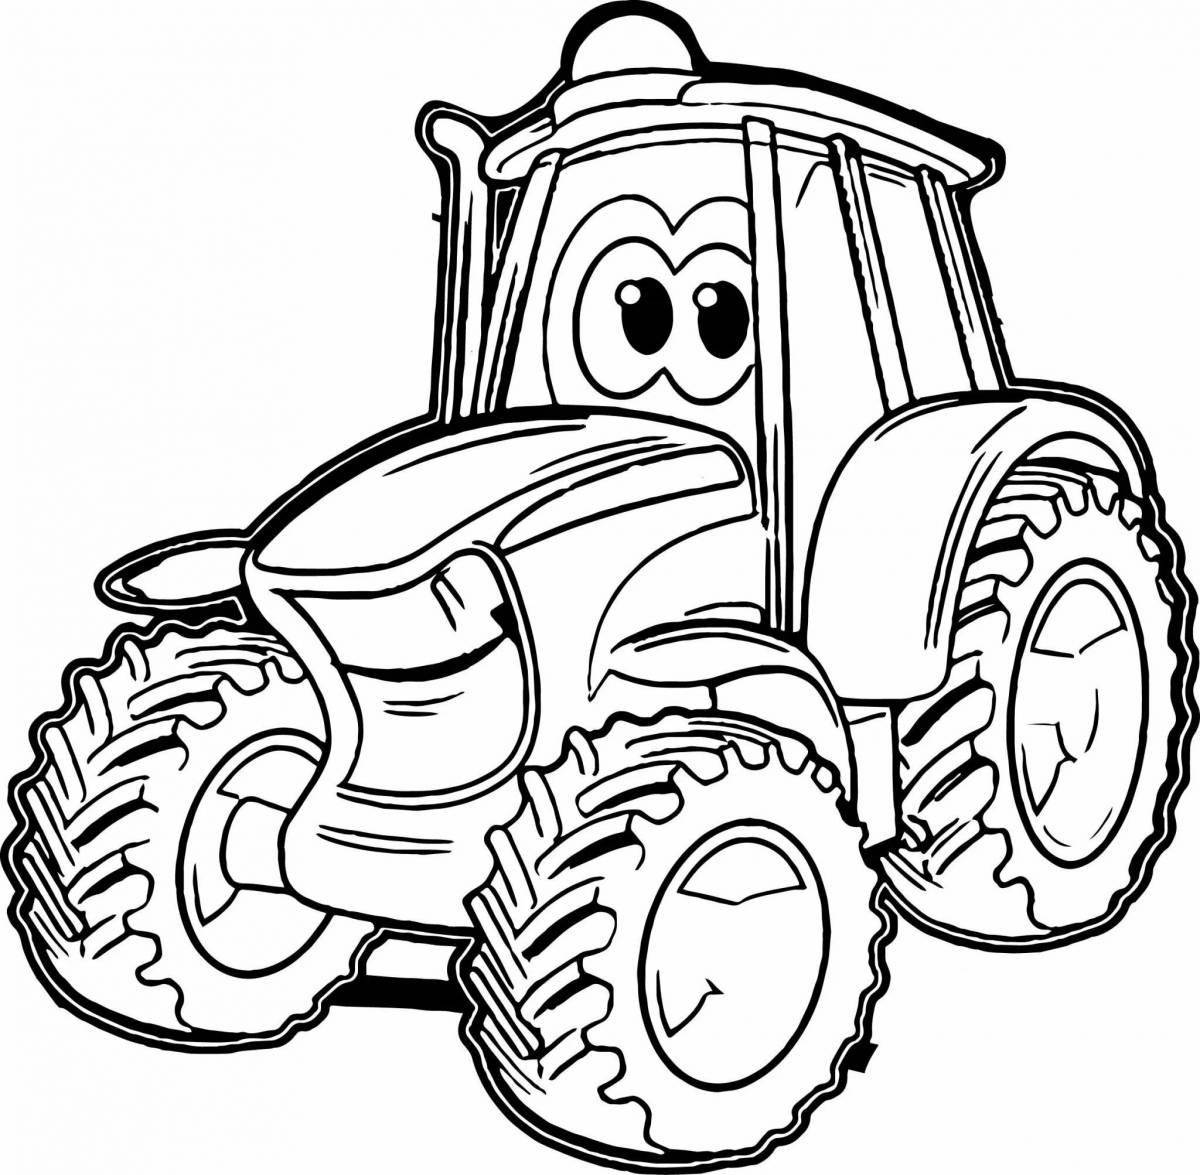 Unique tractor pattern